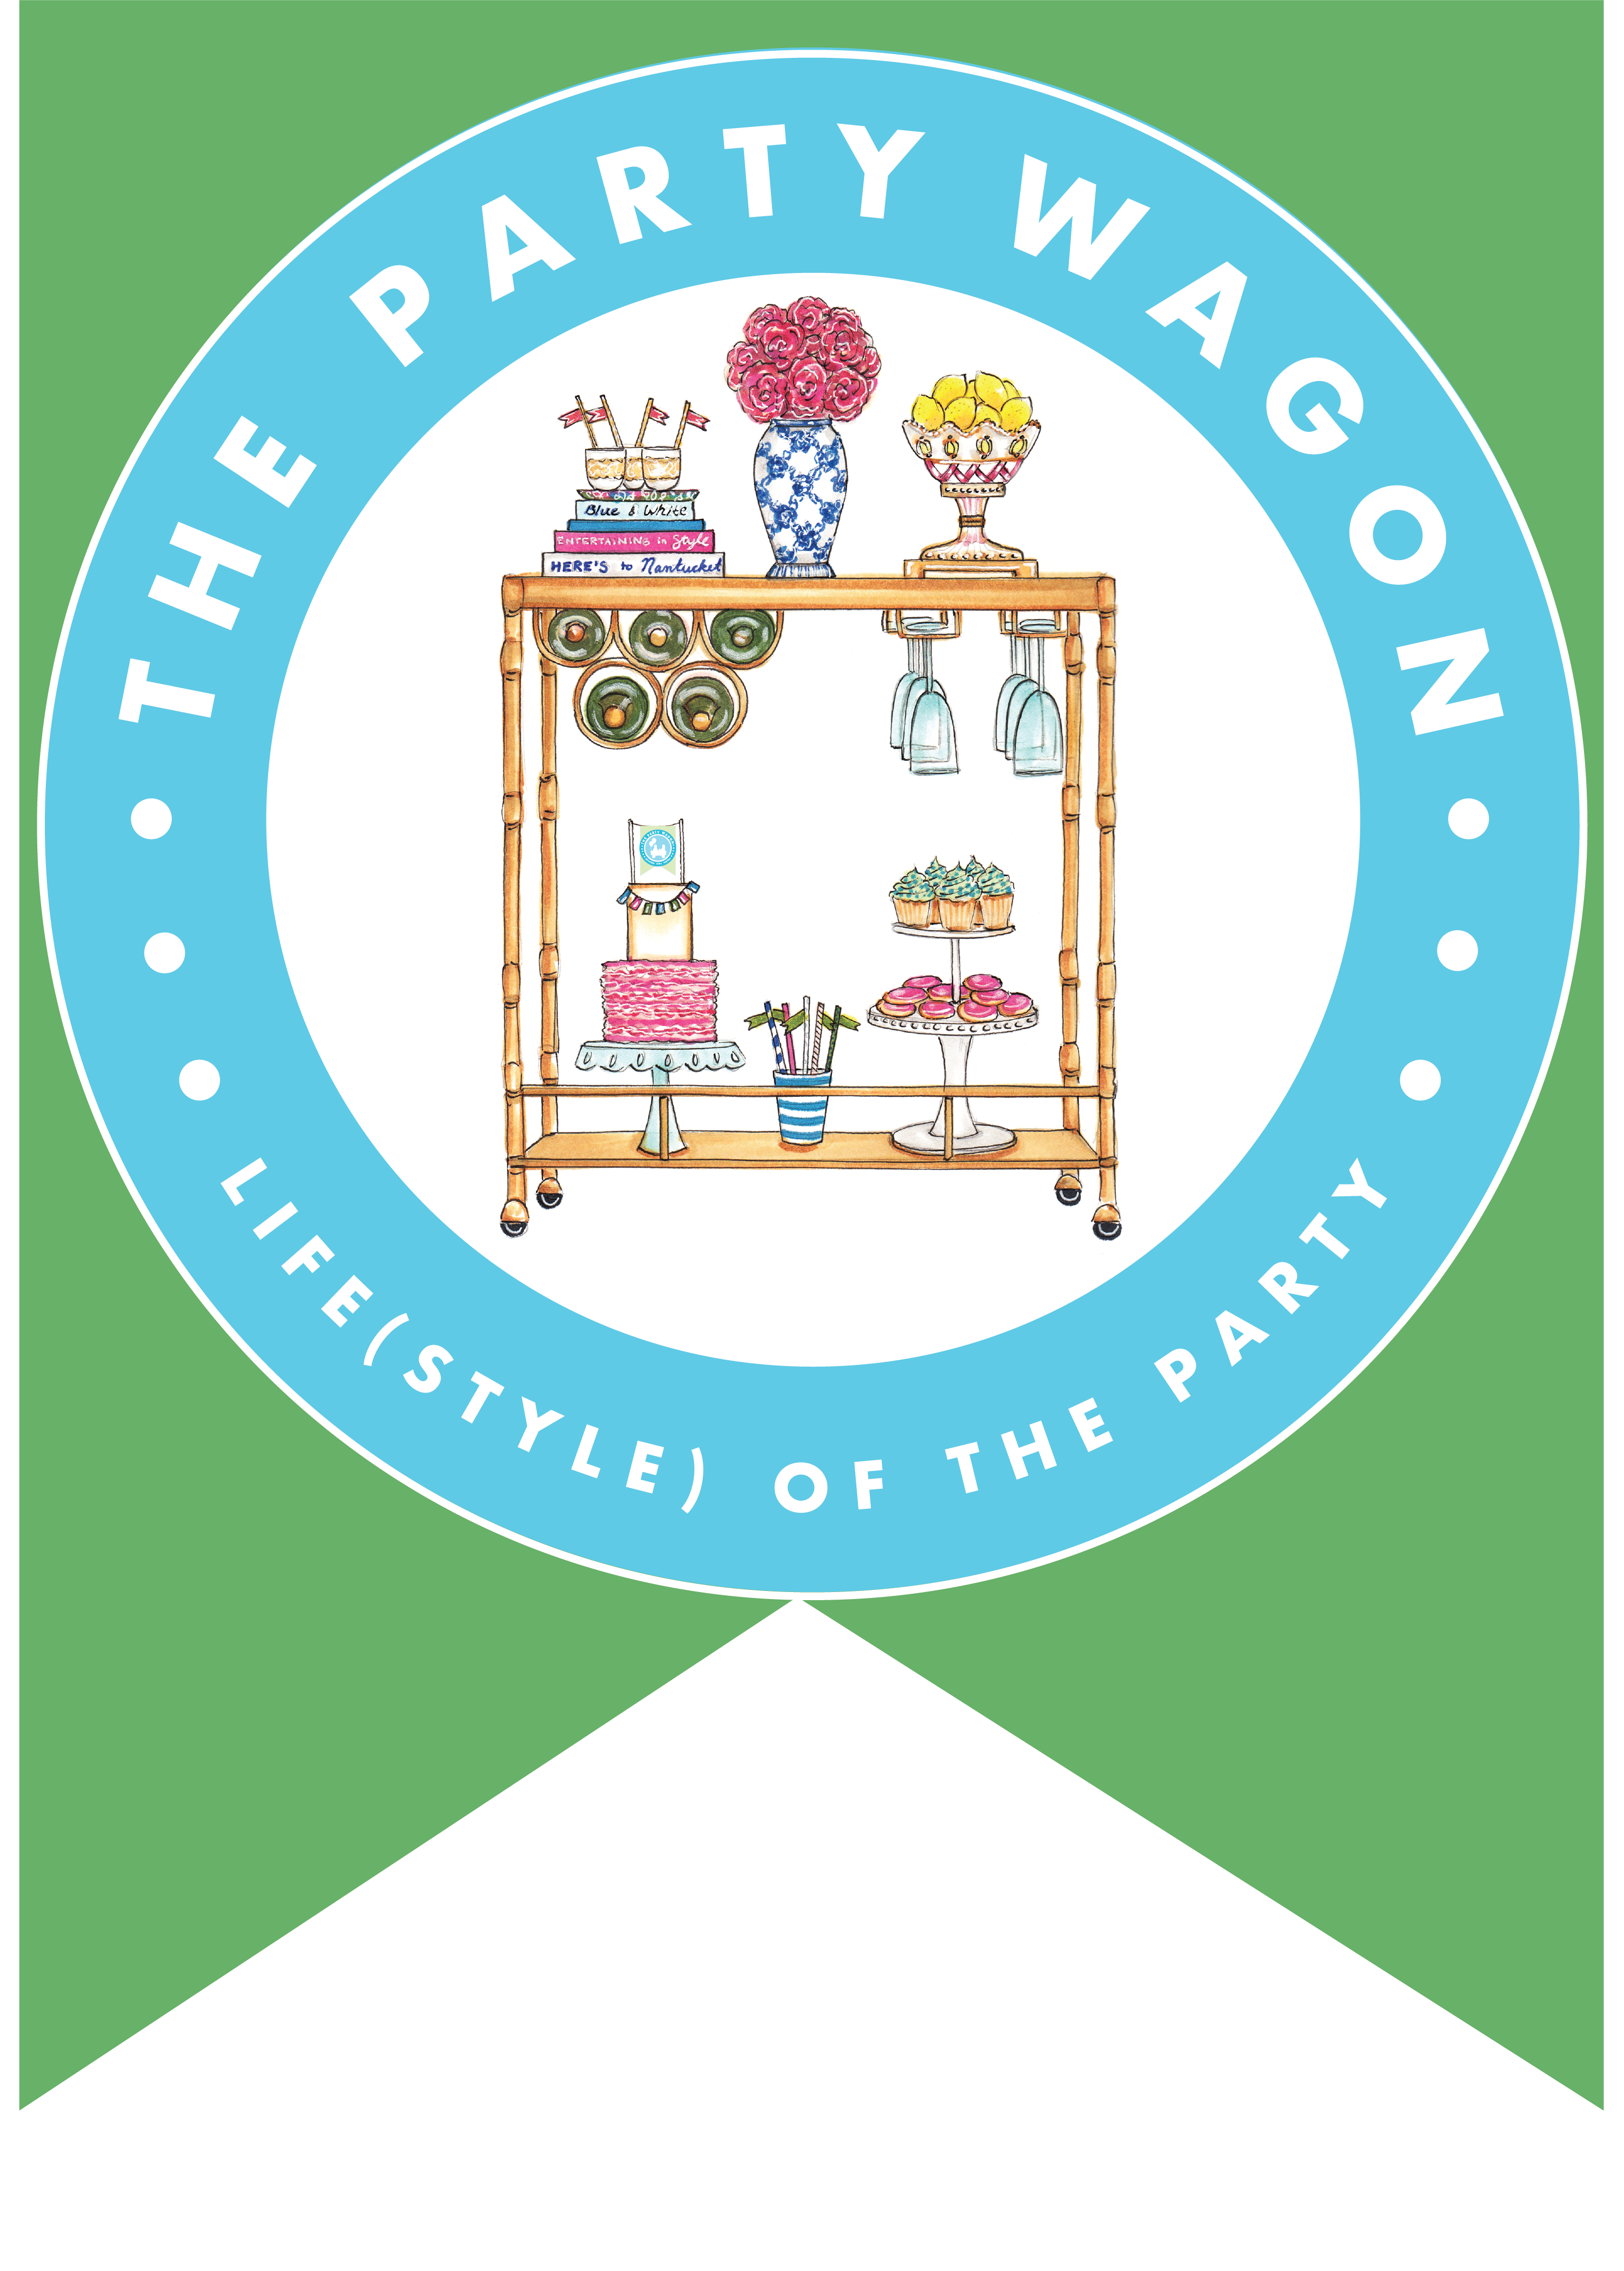 the party wagon logo final